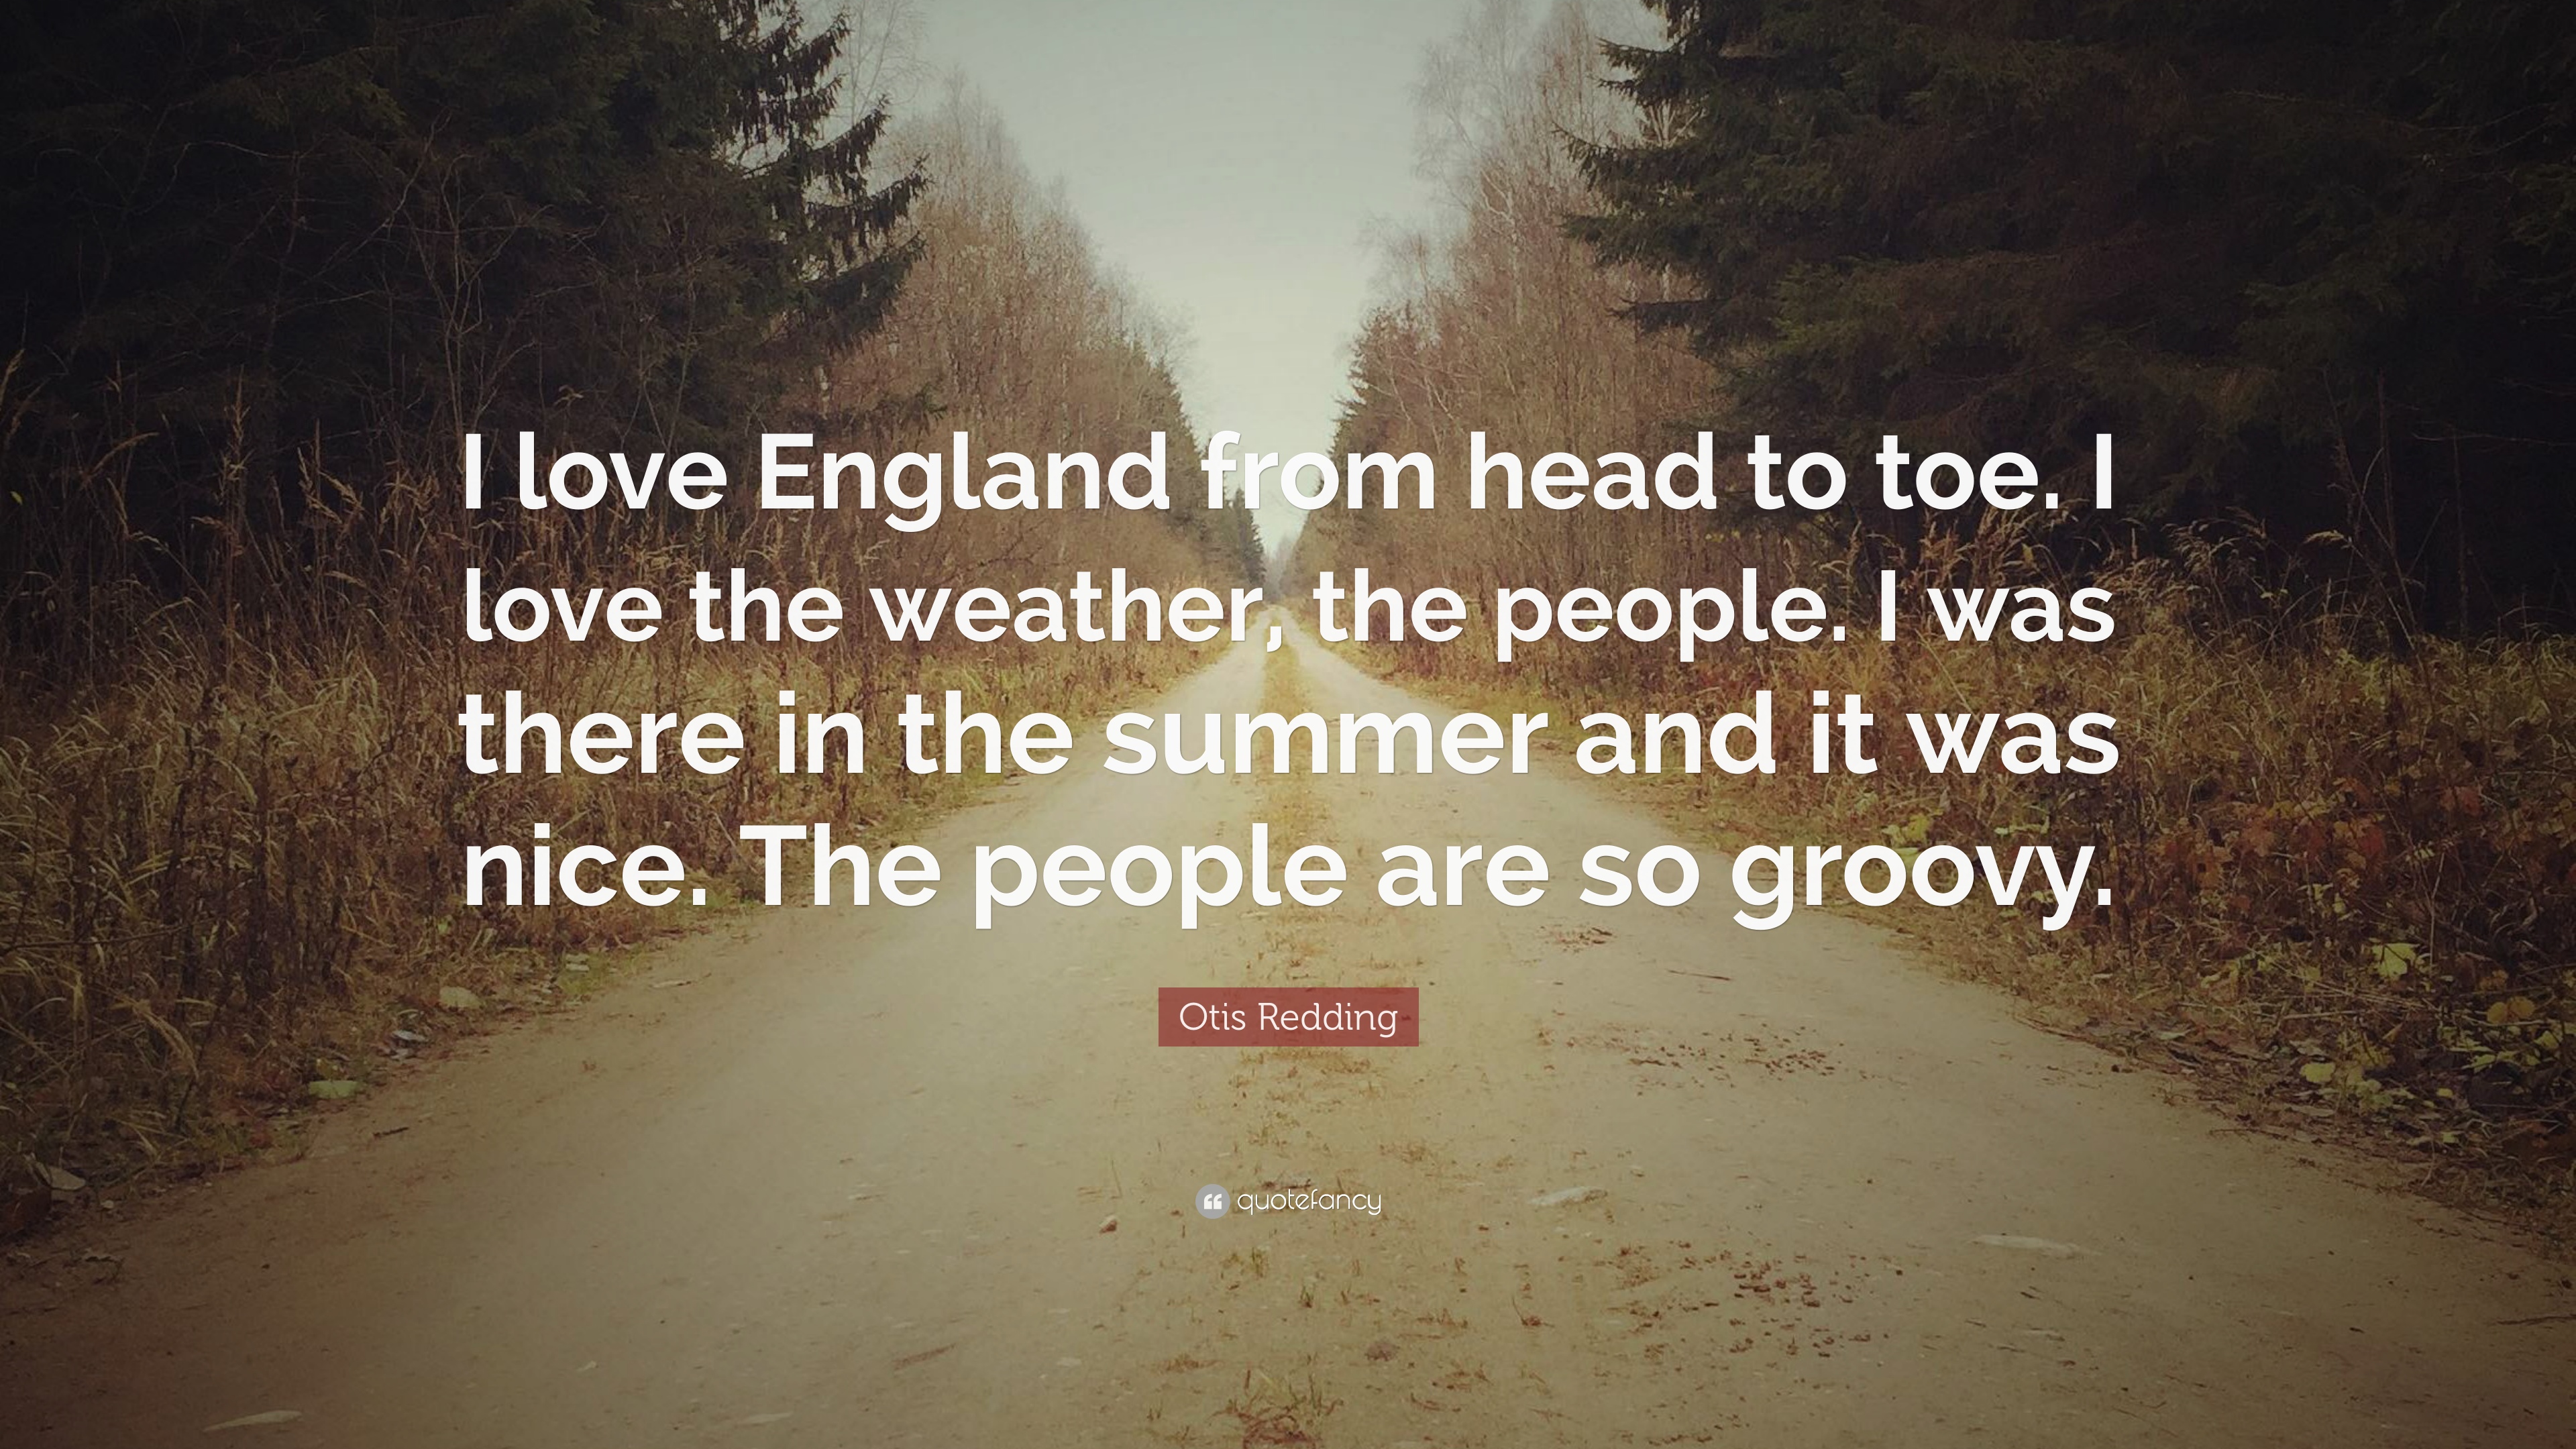 Otis Redding Quote: “I love England from head to toe. I love